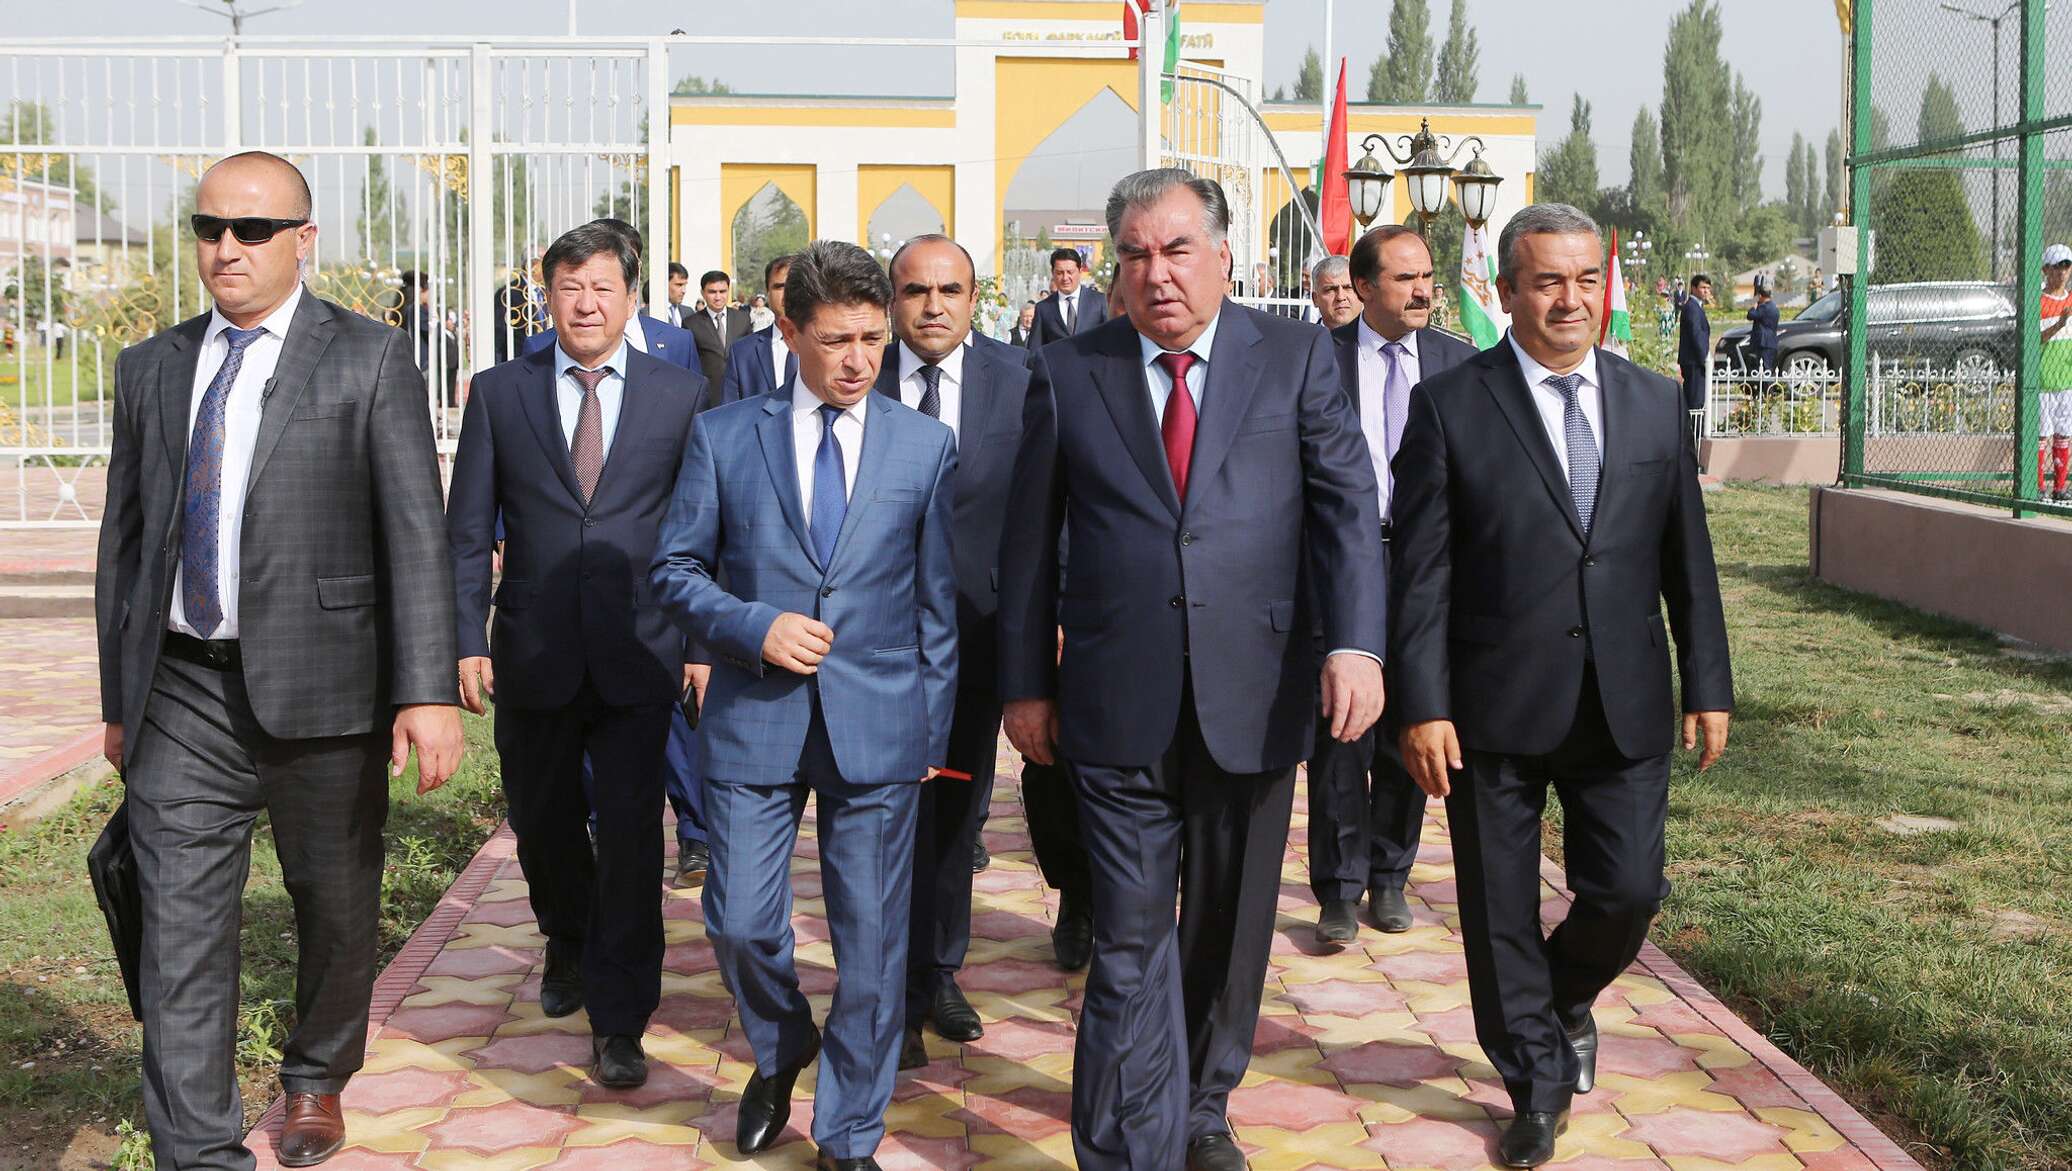 Точикистон нохияи. Эмомали Рахмон. Охрана президента Таджикистана Эмомали Рахмон. Охрана президента Таджикистана Мурод Саидов. Охрана президента Таджикистана Эмомали Рахмон 2010.